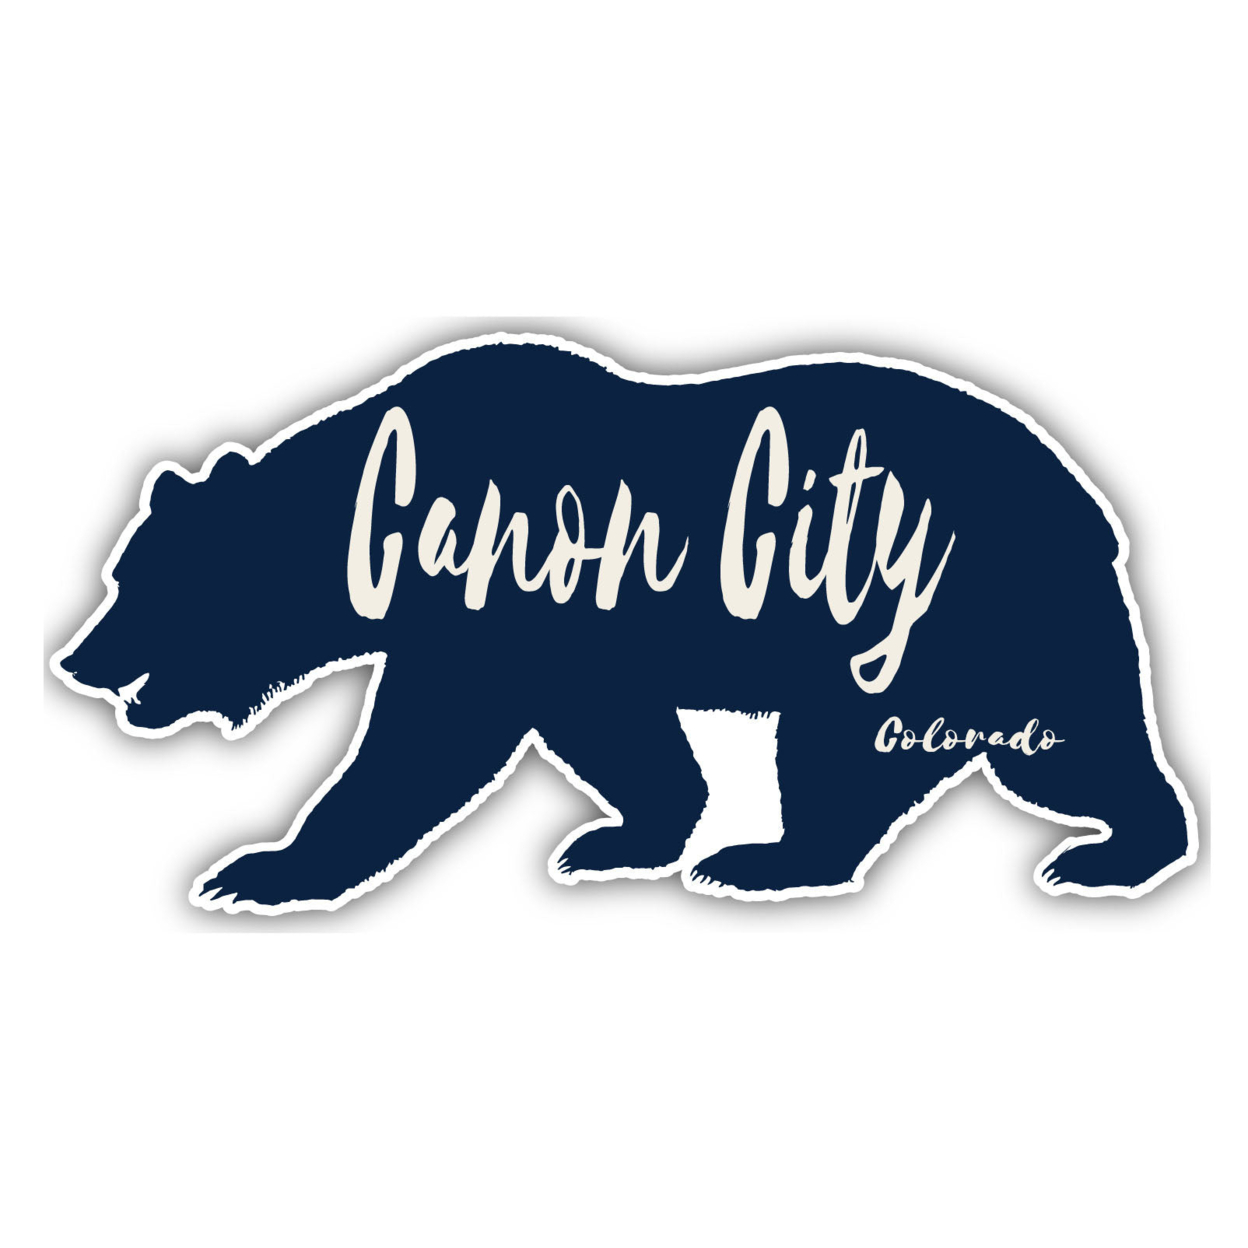 Canon City Colorado Souvenir Decorative Stickers (Choose Theme And Size) - Single Unit, 12-Inch, Bear